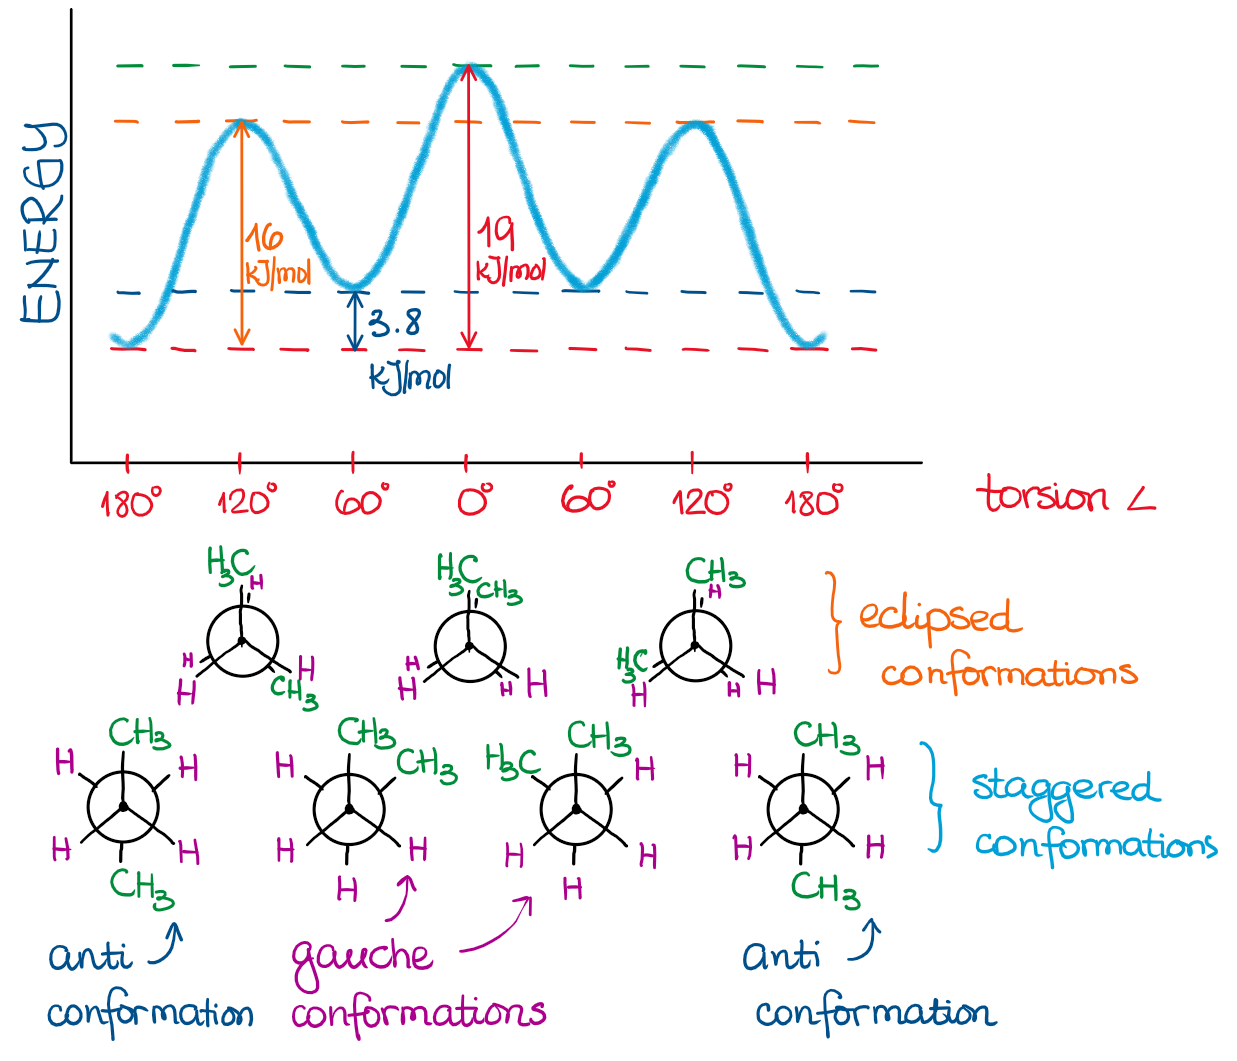 energy profile of butane conformations